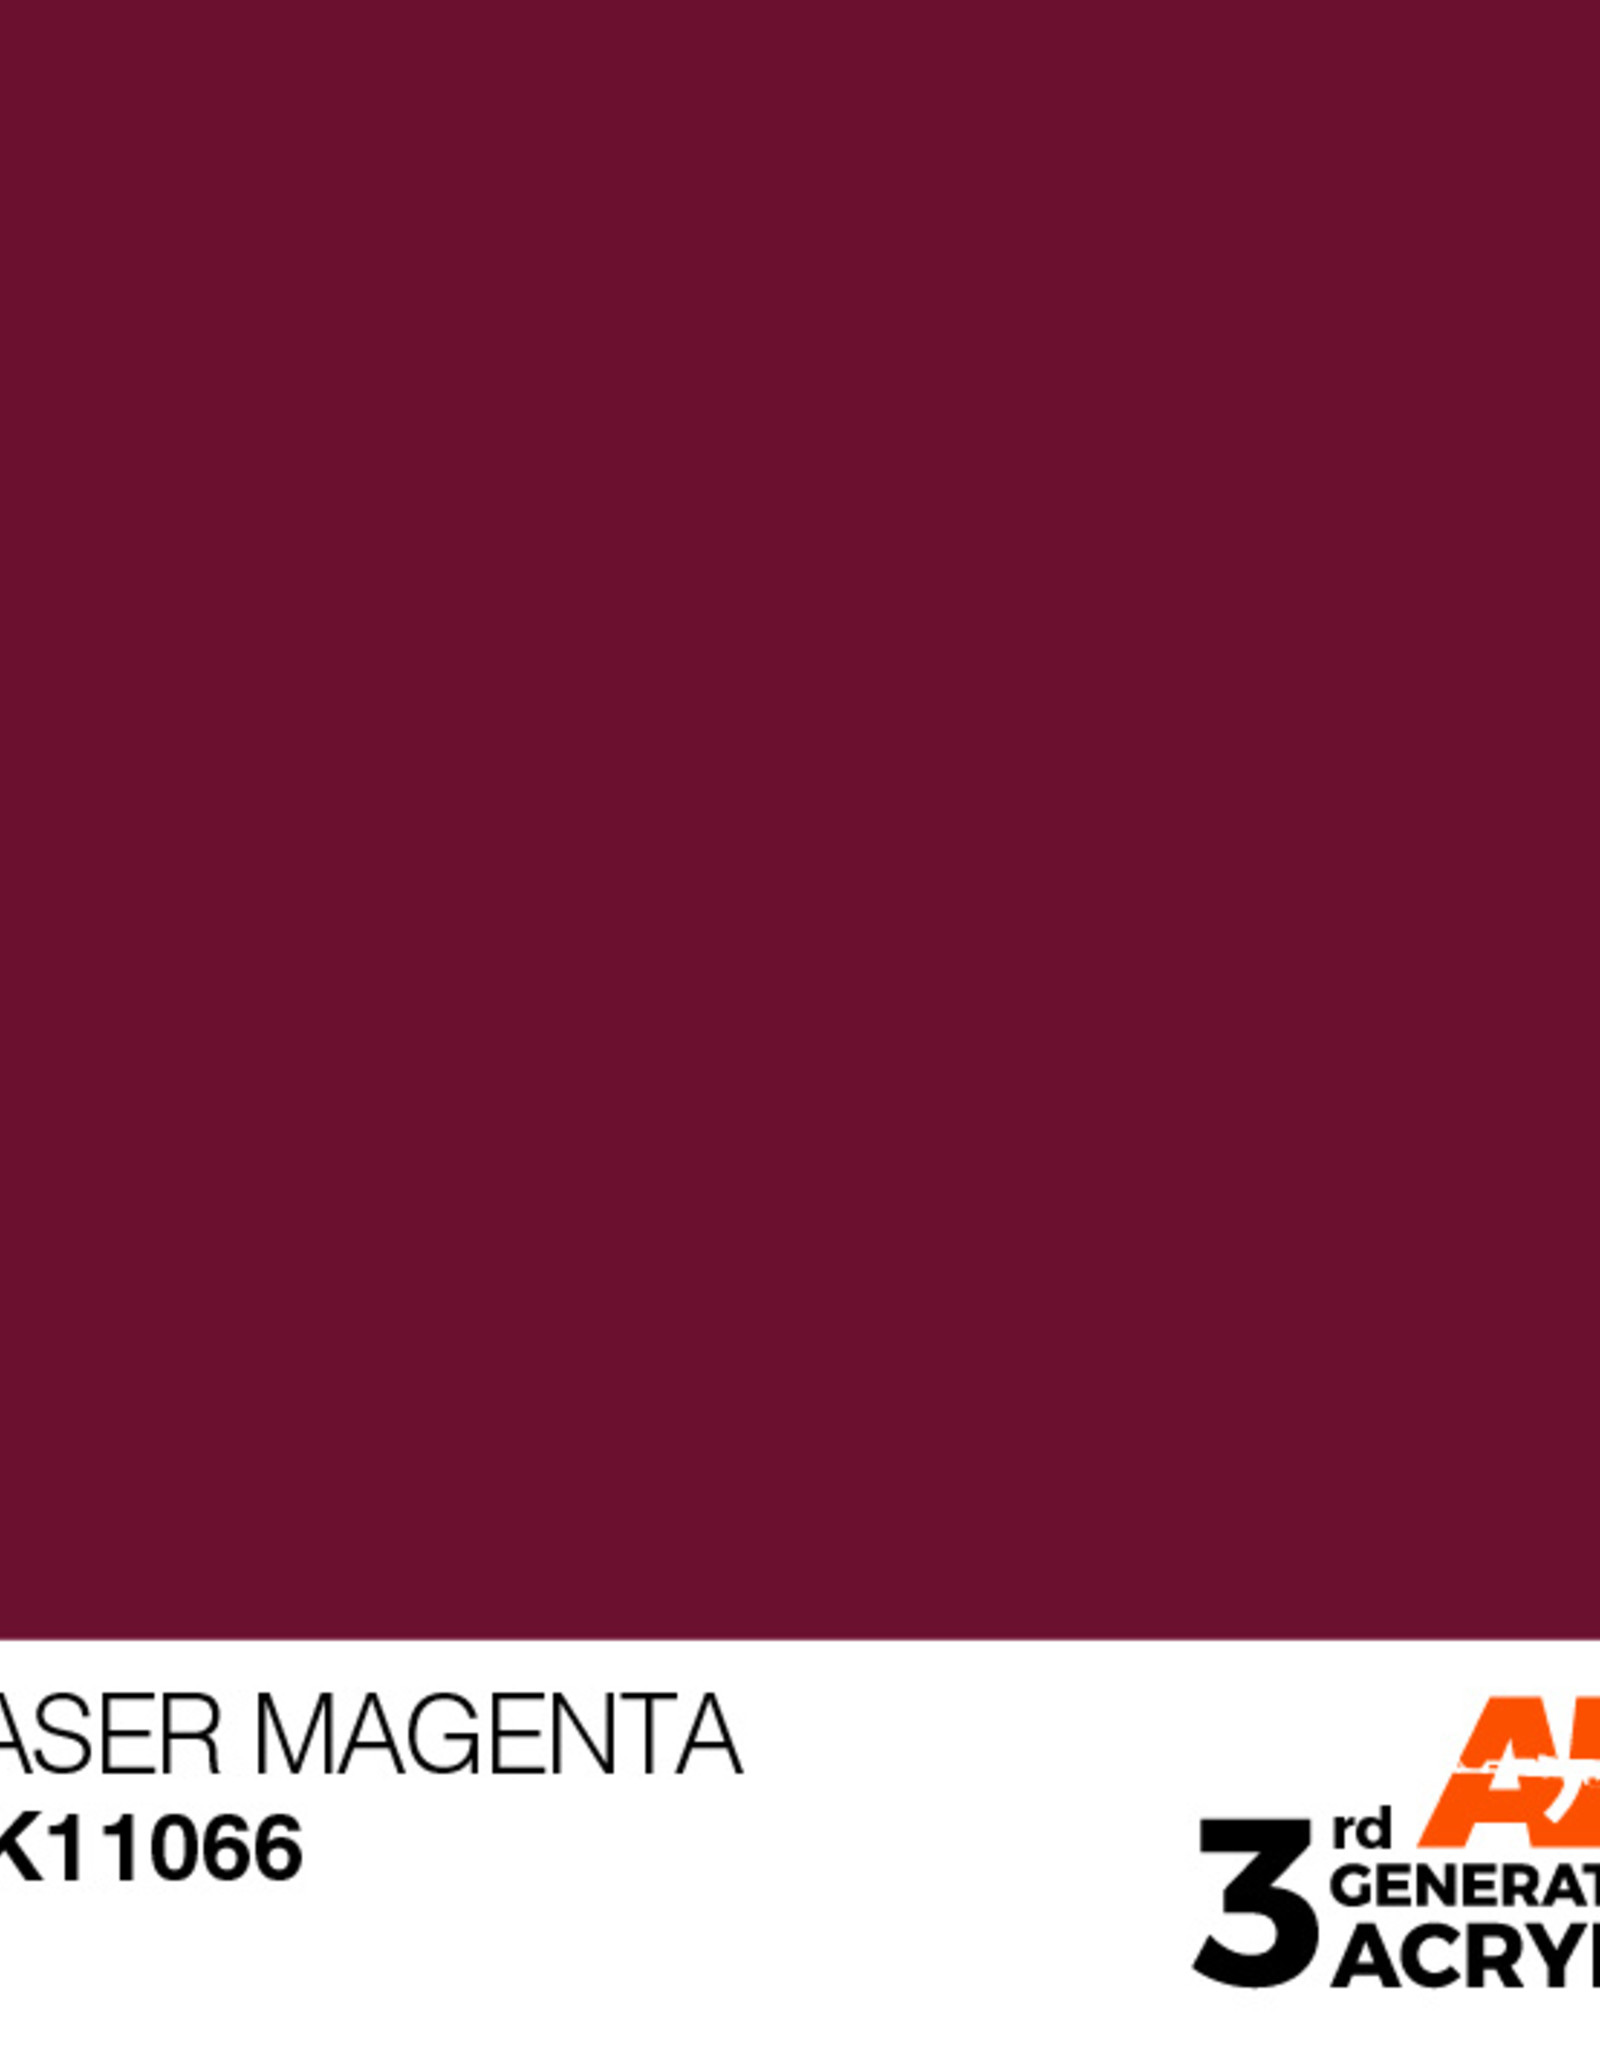 AK Interactive AK 3rd Gen Acrylics: Laser Magenta (17ml)